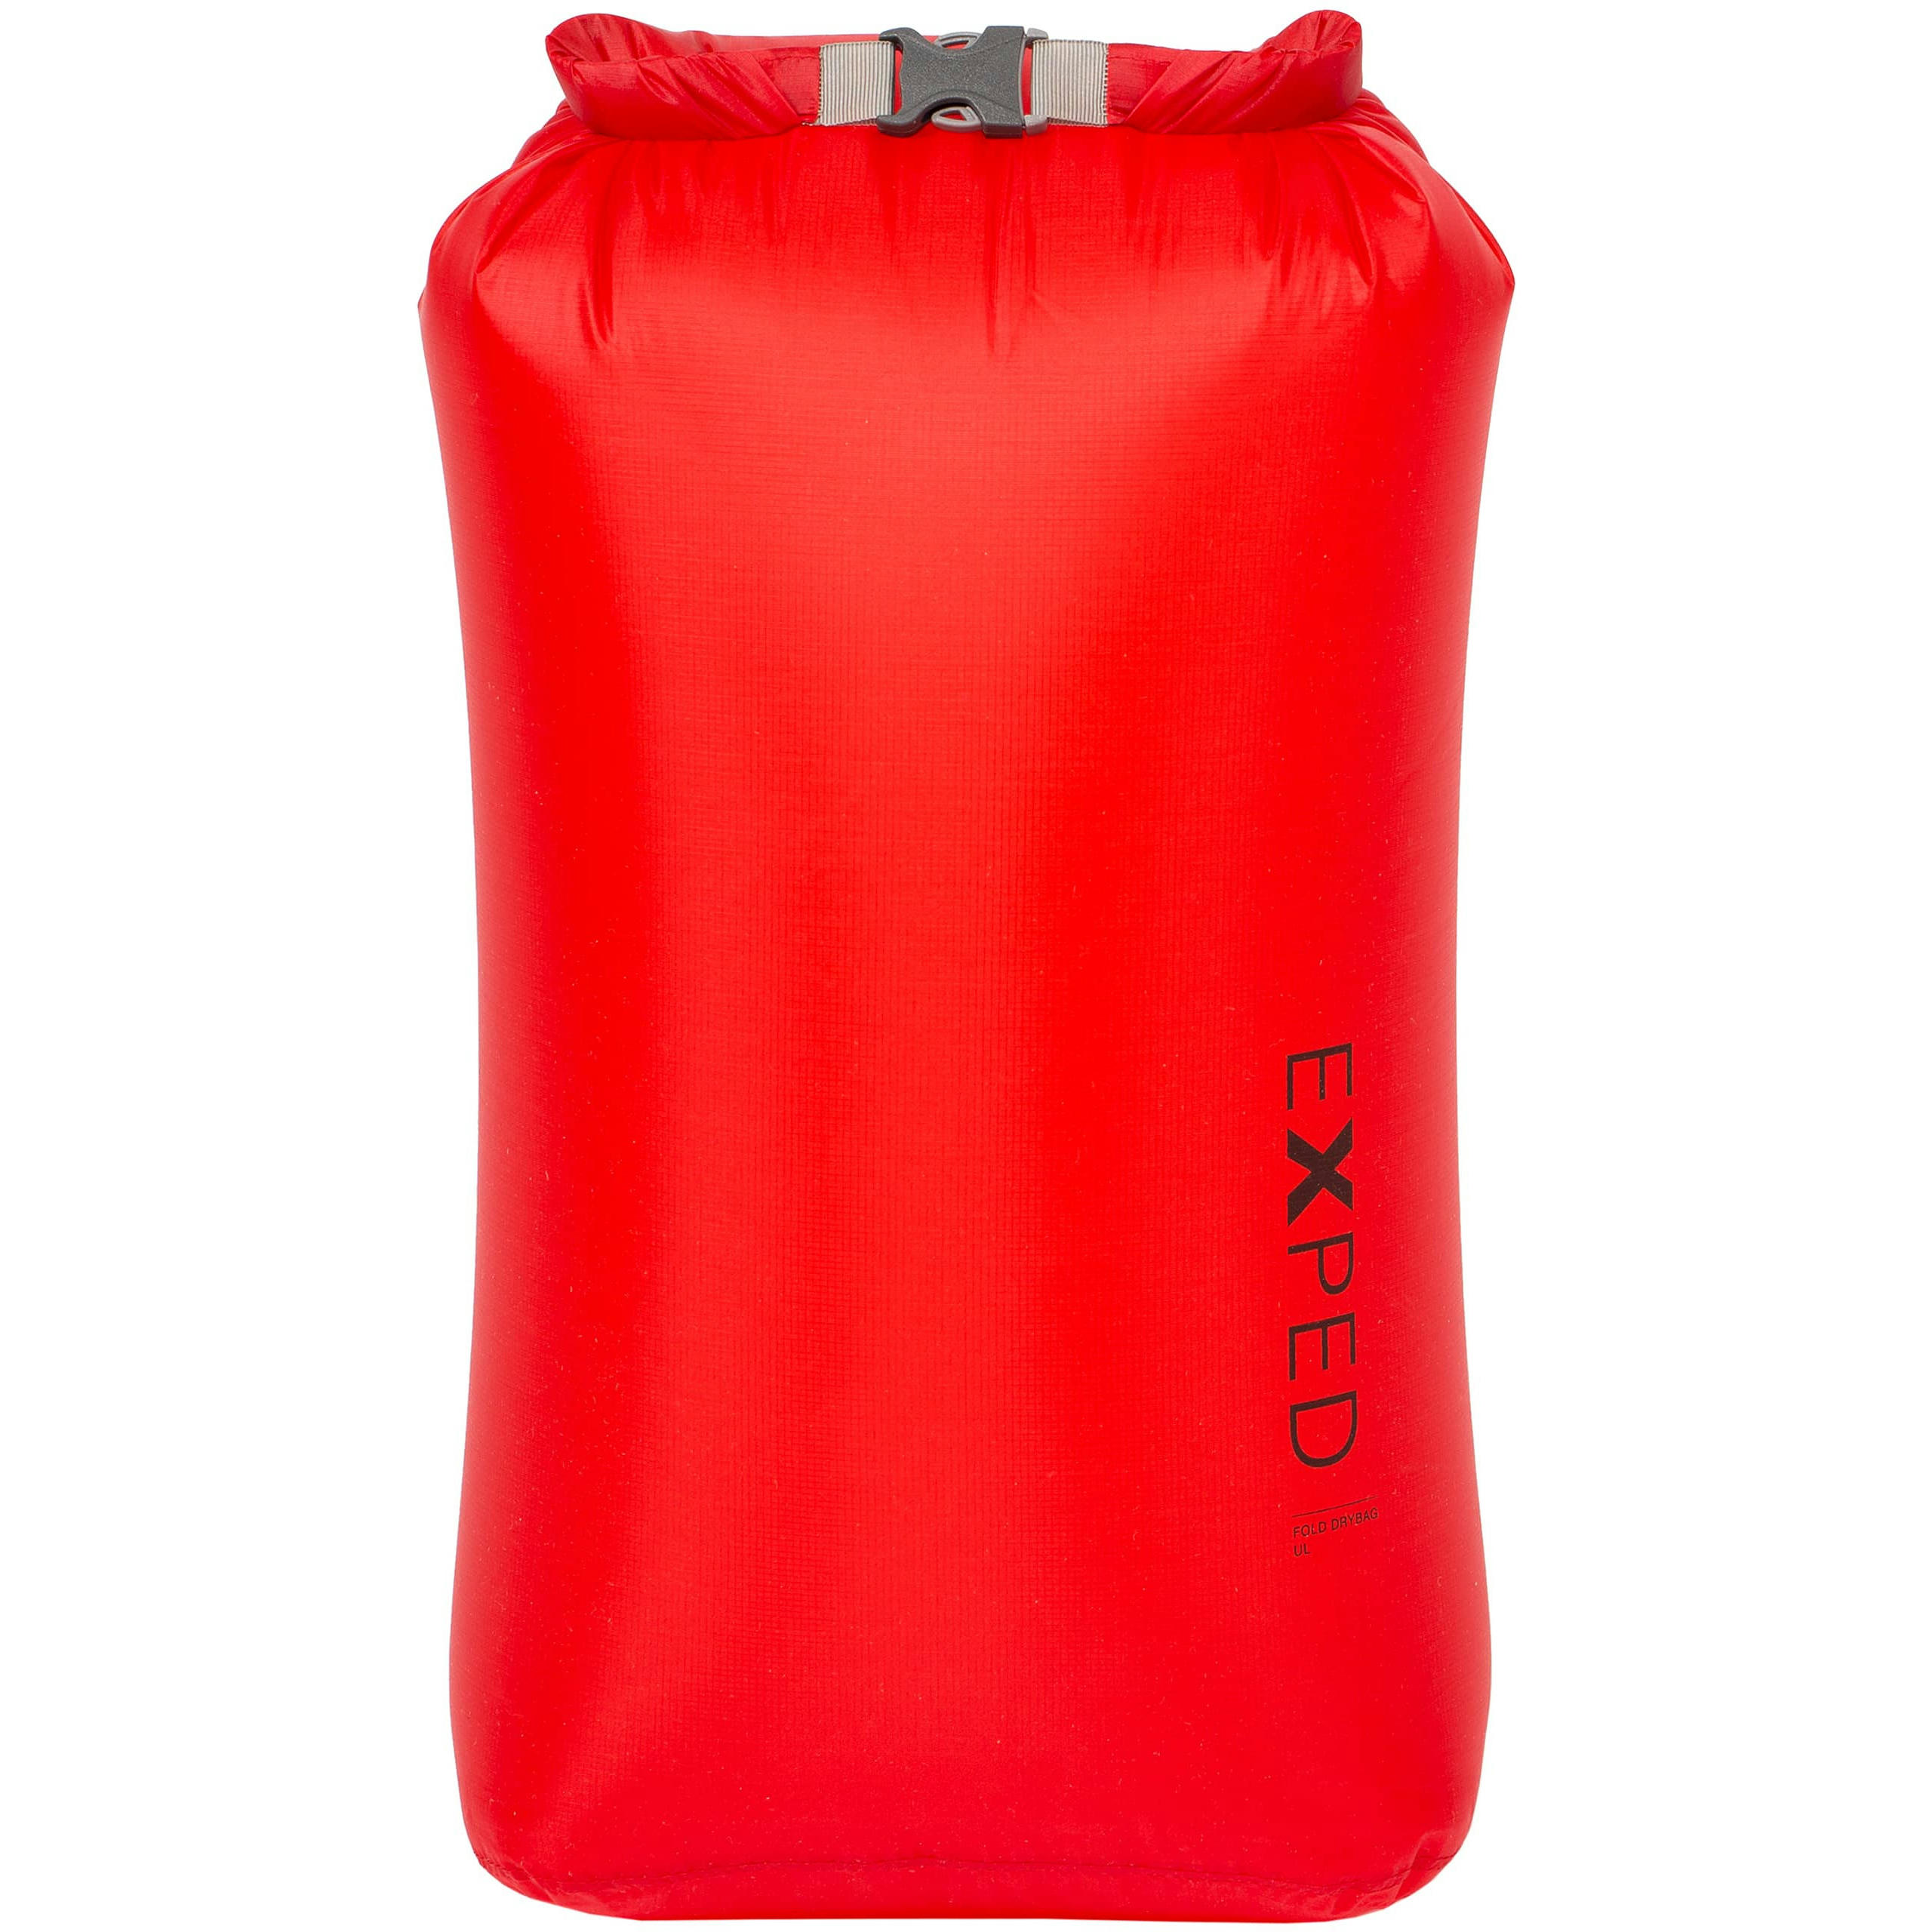 Гермомешок Exped Fold Drybag UL M red красный фото 1